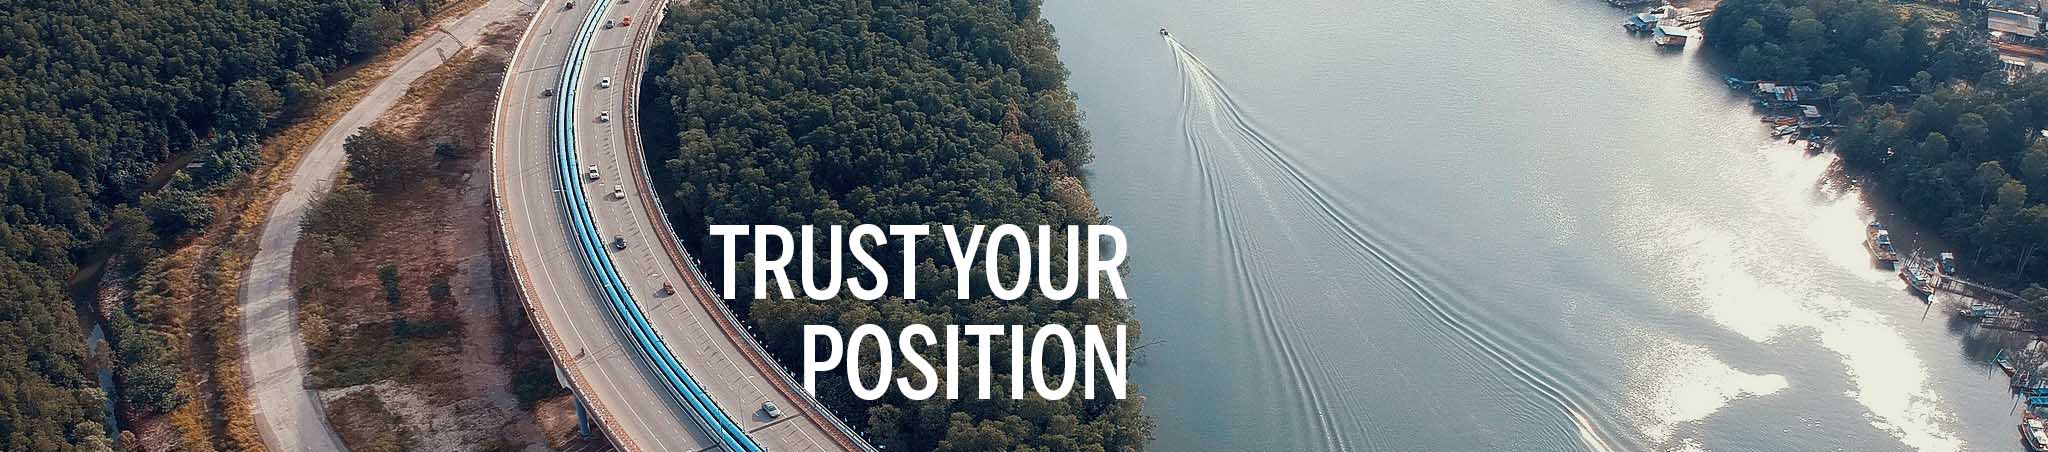 trust your position